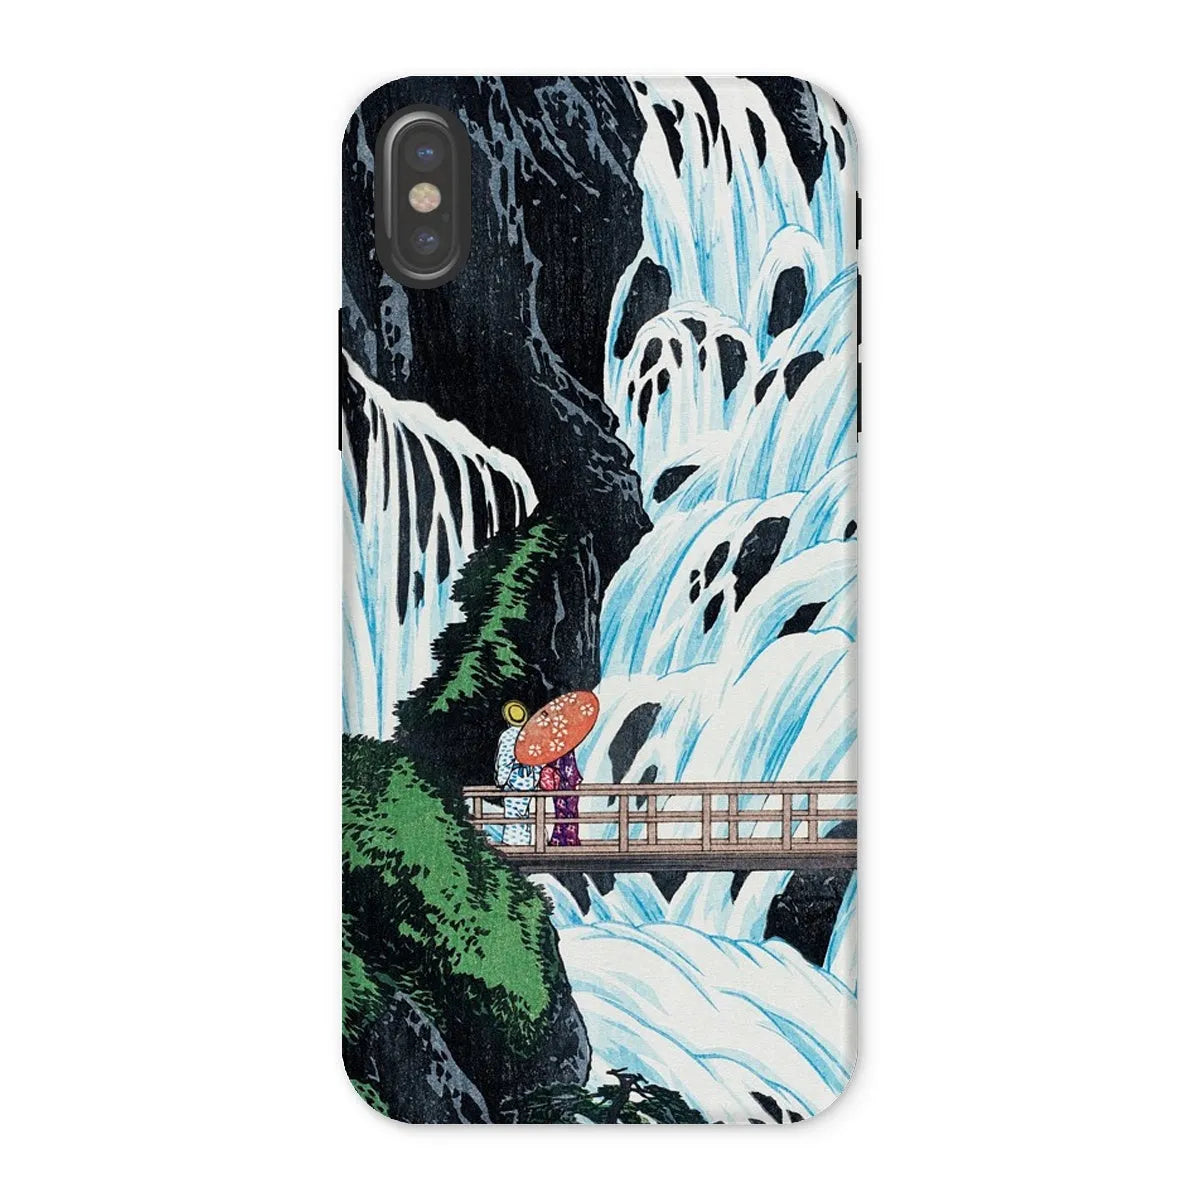 Shiragumo Waterfall - Shin-hanga Phone Case - Hiroaki Takahashi - Iphone x / Matte - Mobile Phone Cases - Aesthetic Art